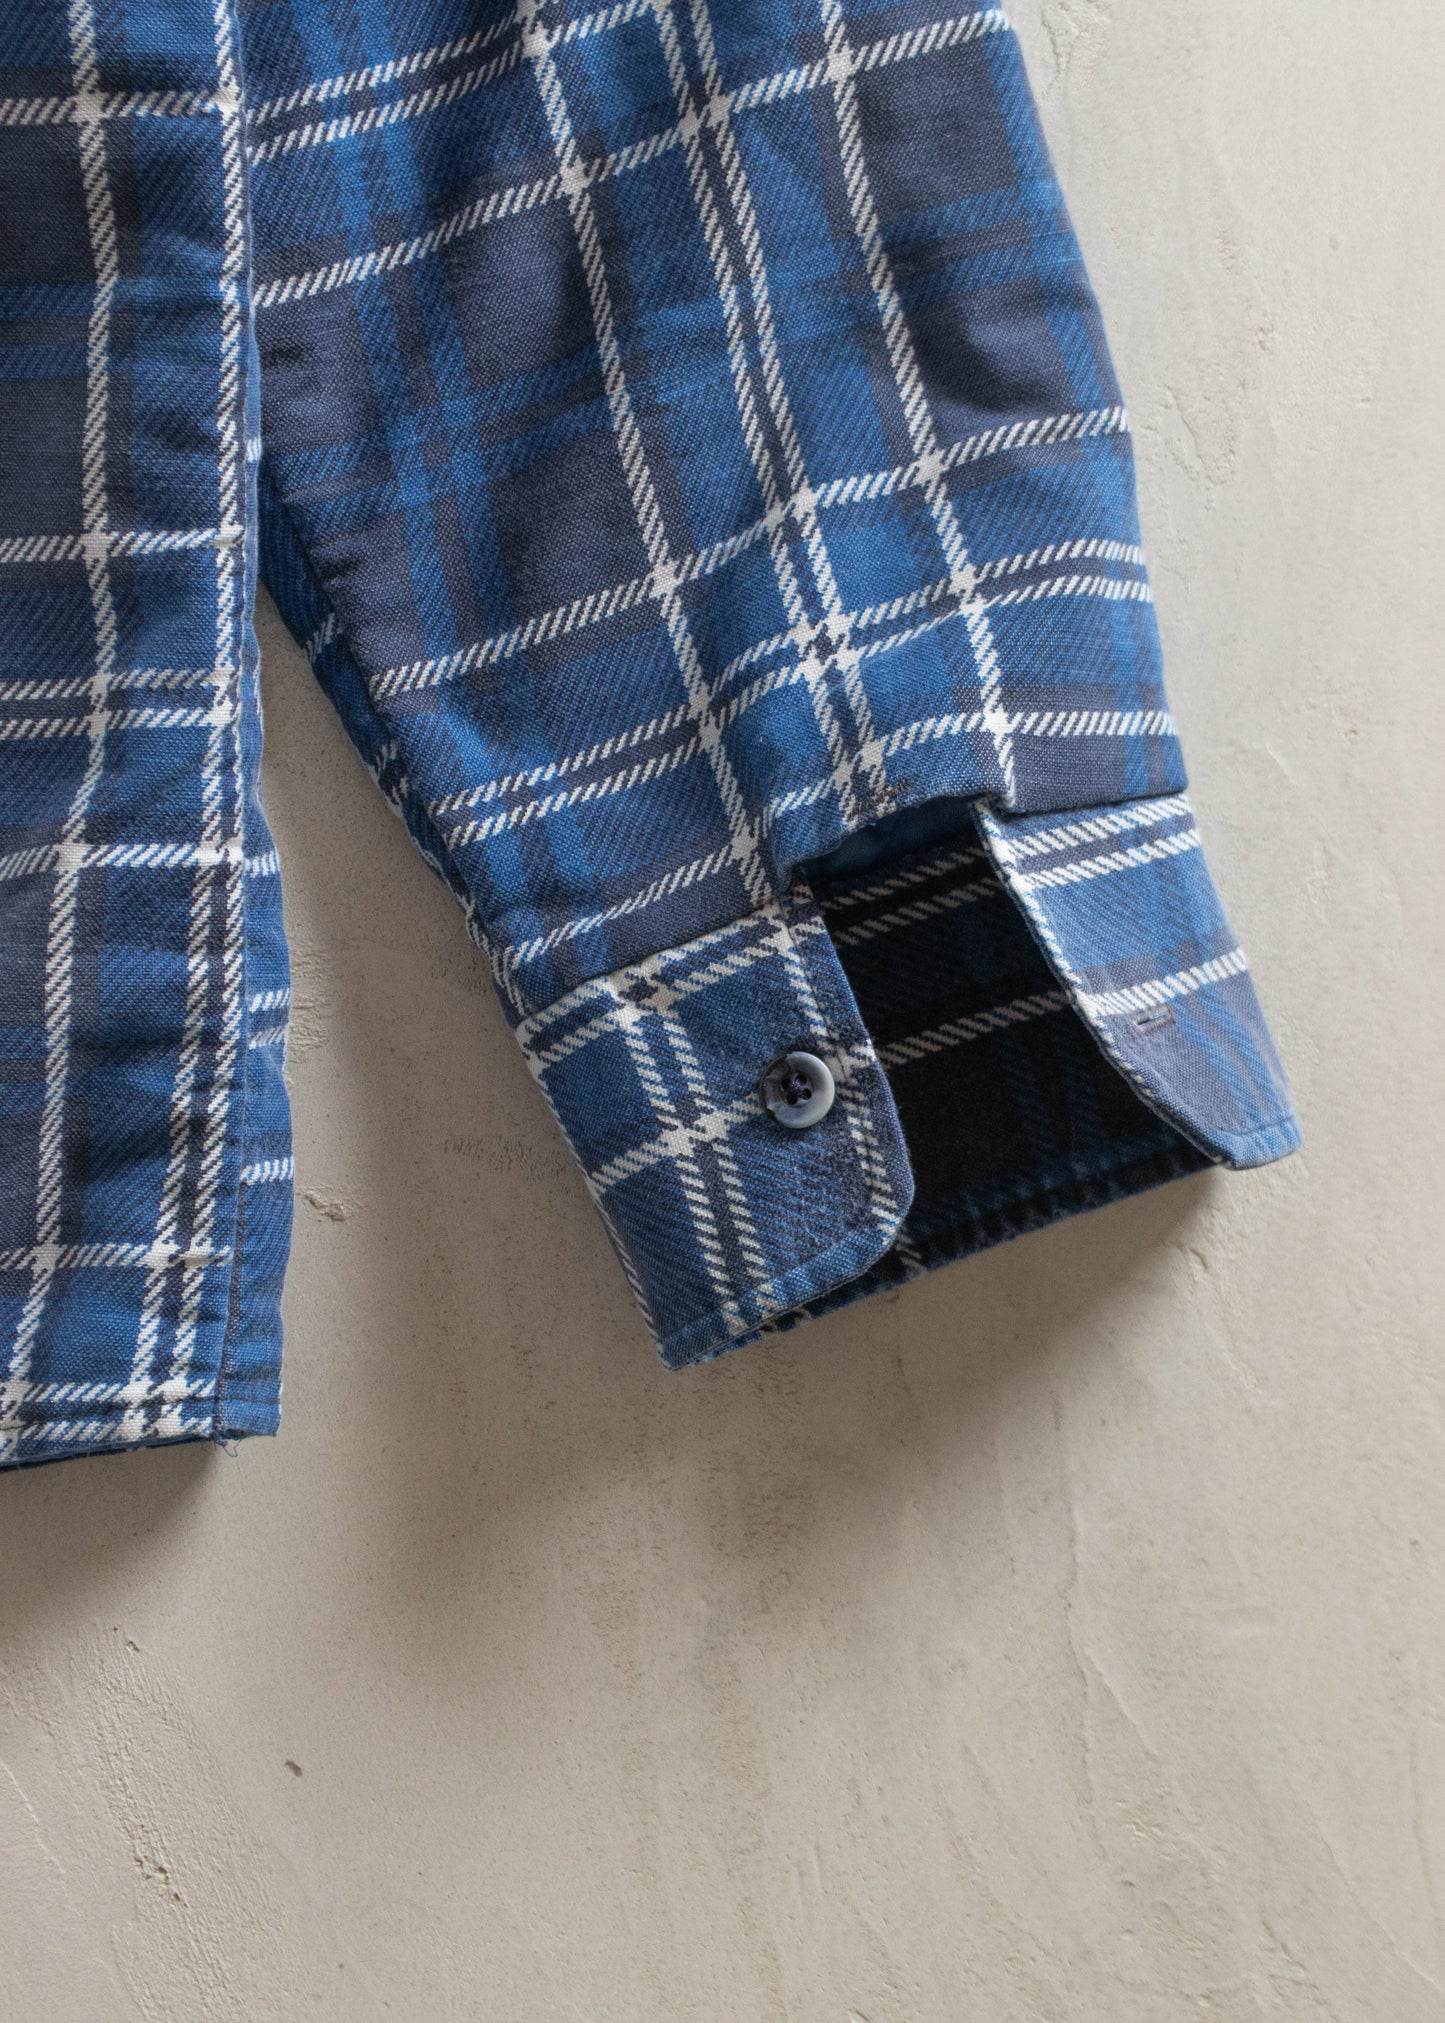 Vintage 1980s Fieldmaster Padded Cotton Flannel Jacket Size M/L